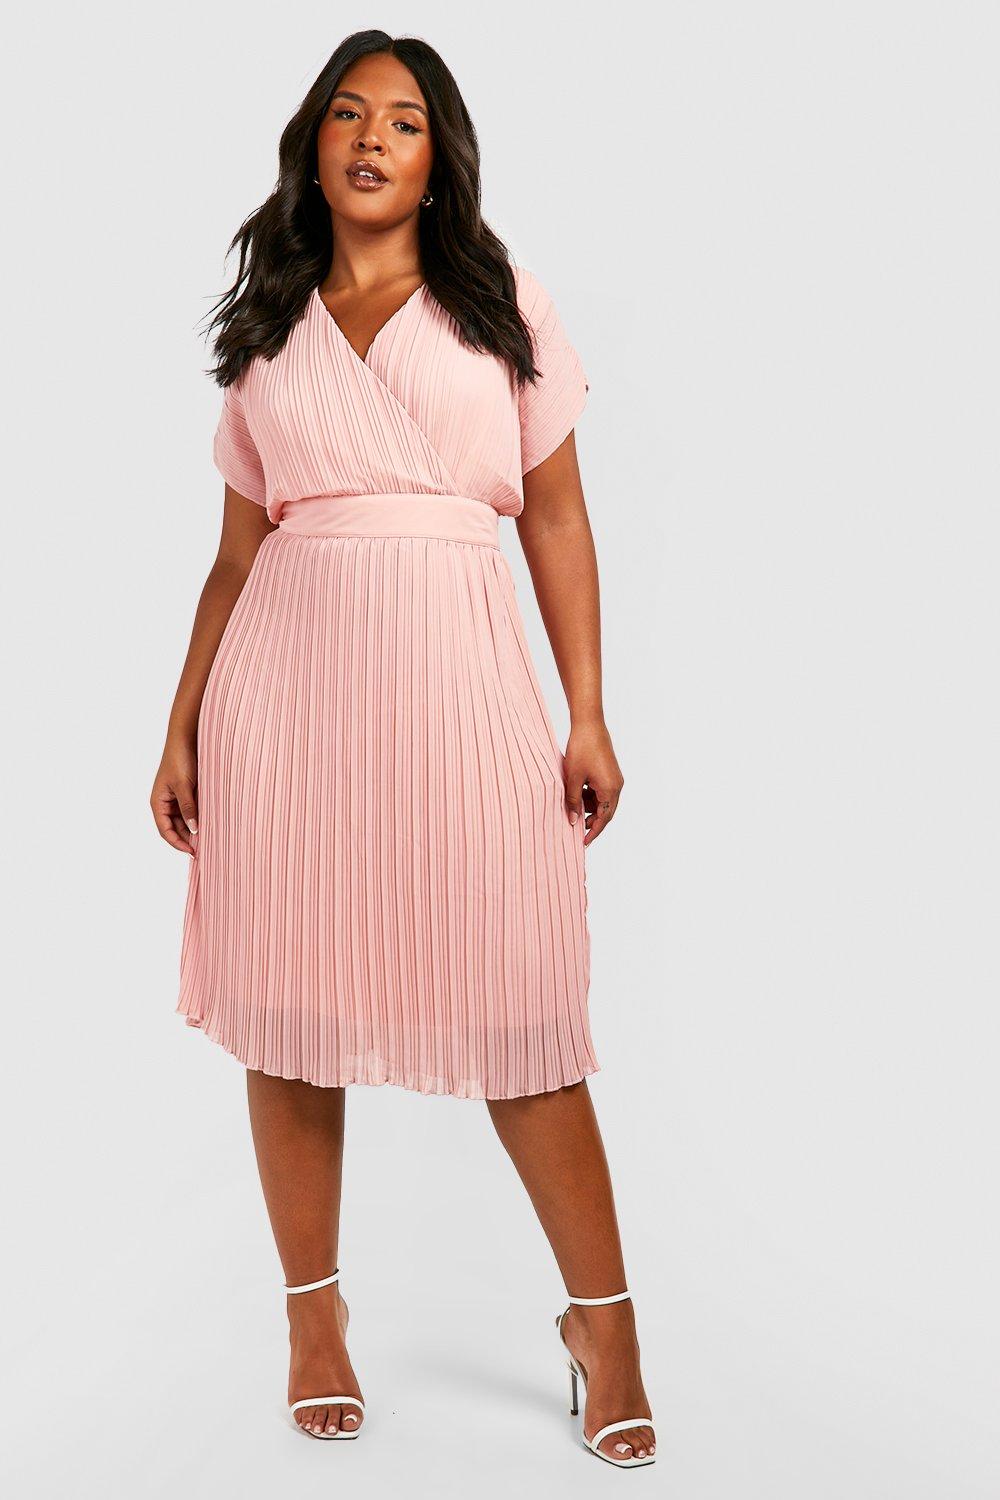 Plus Size Summer Dresses | boohoo UK